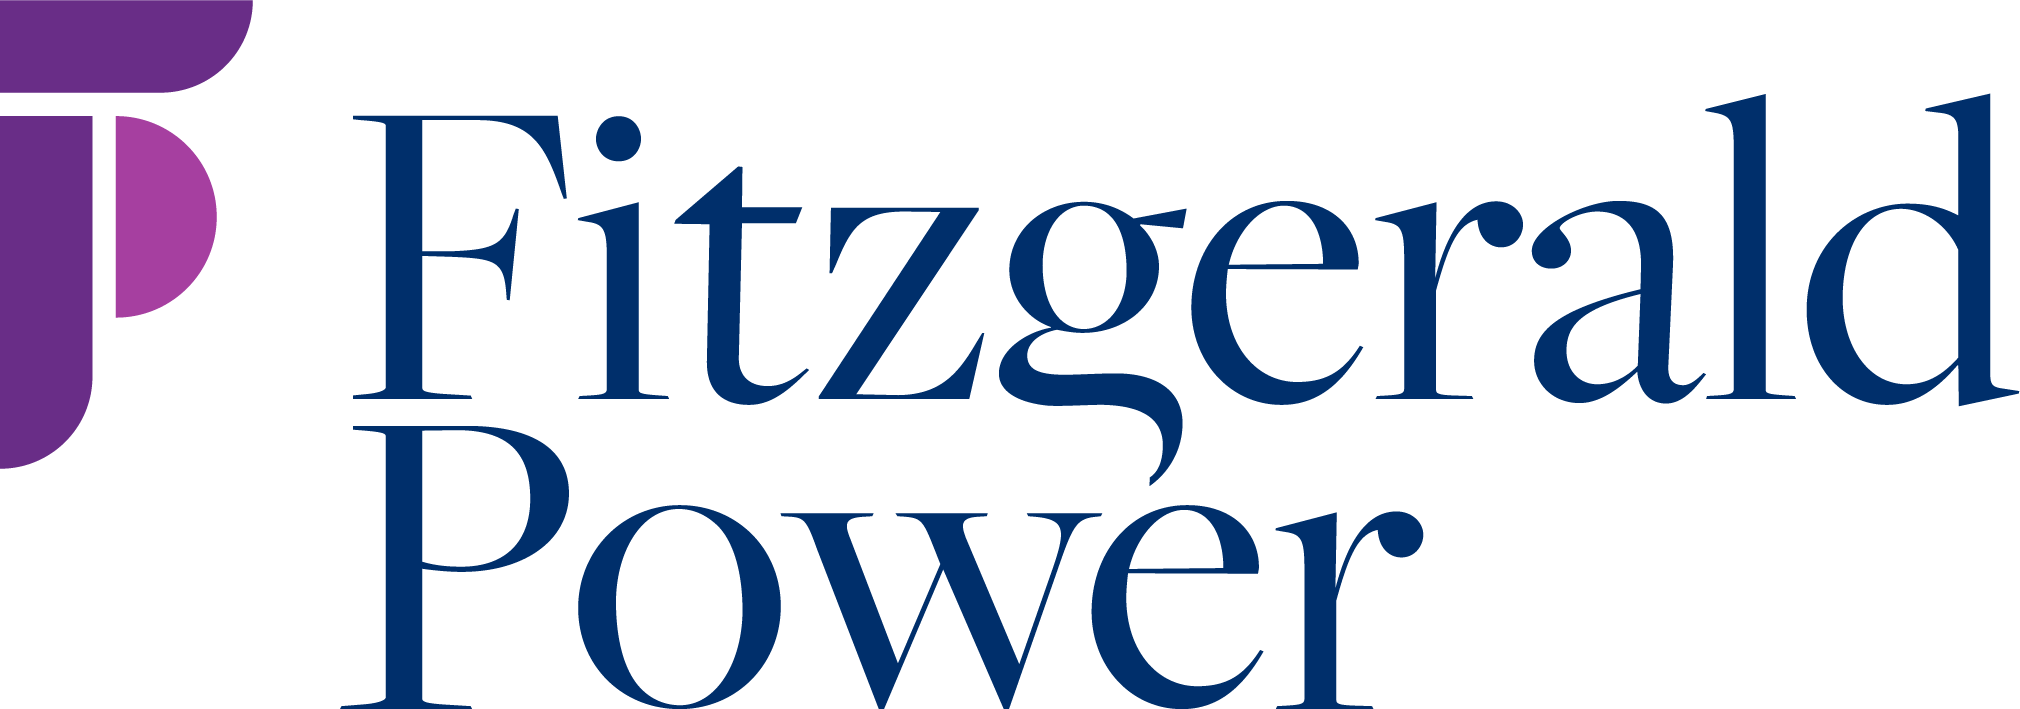 Fitzgerald Power